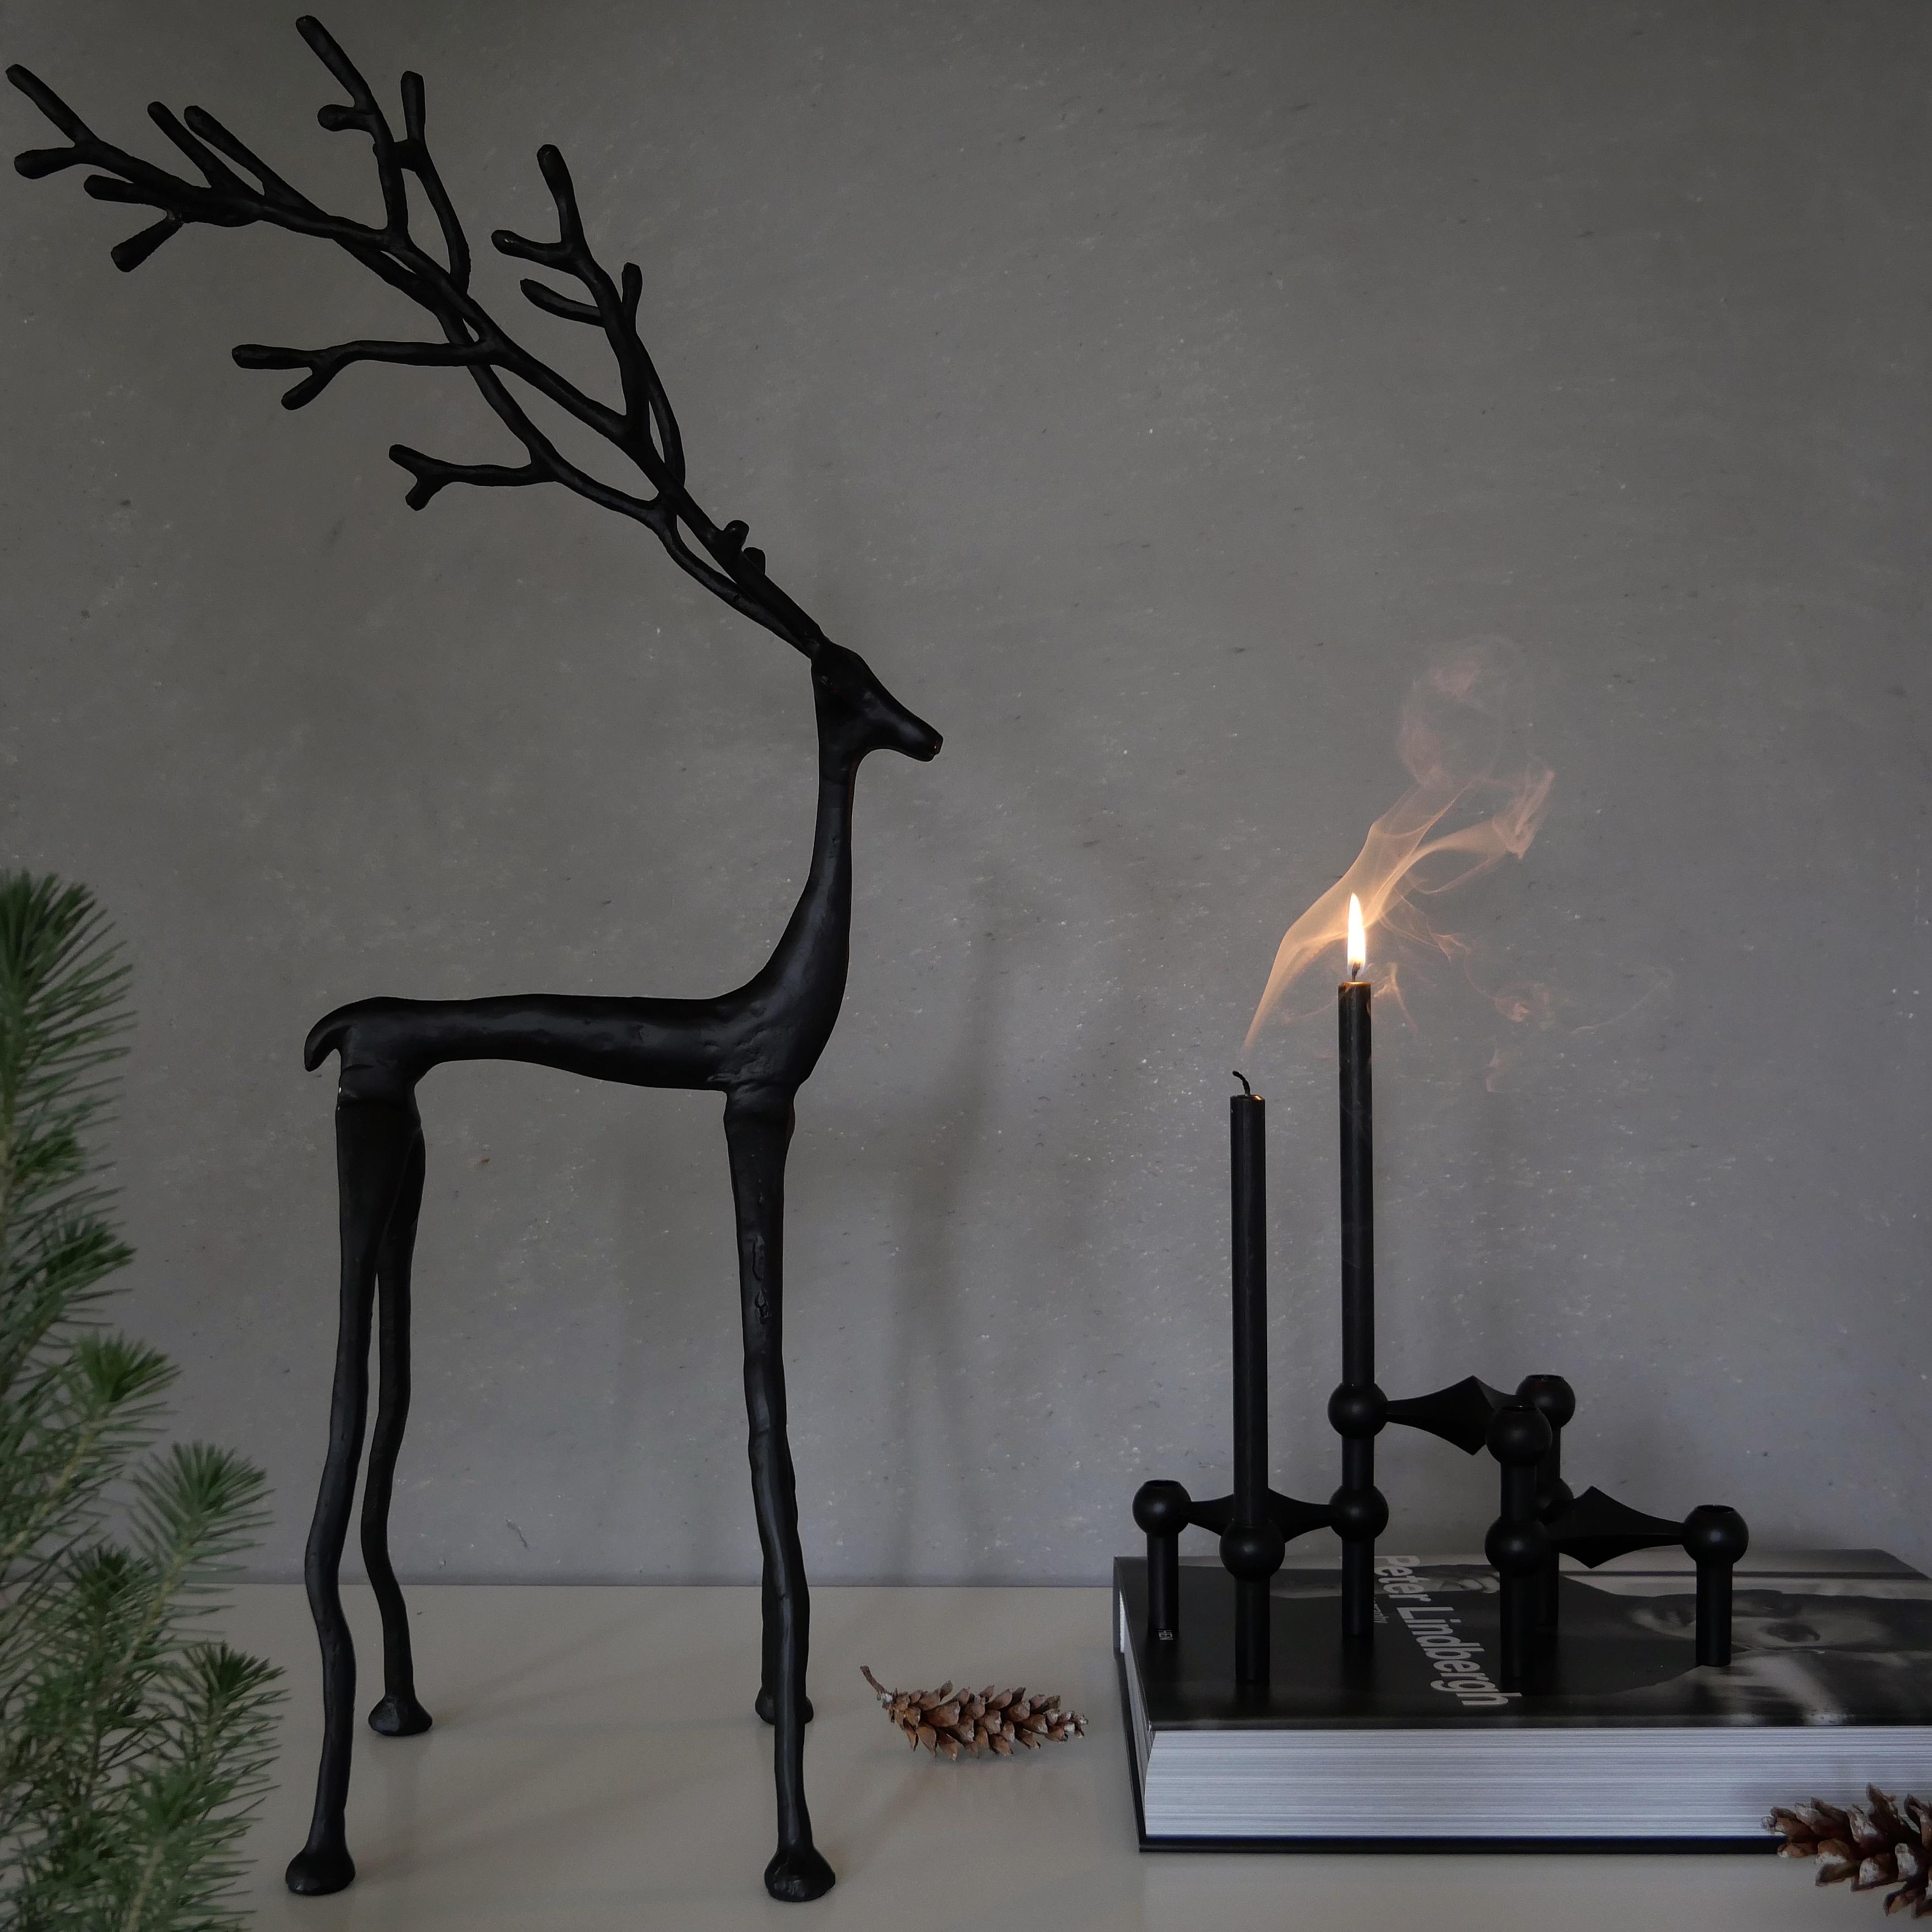 SMALL MOMENTS OF CALM 🖤

#advent #adventsdeko #weihnachtsdeko #black #minimalism #candles 